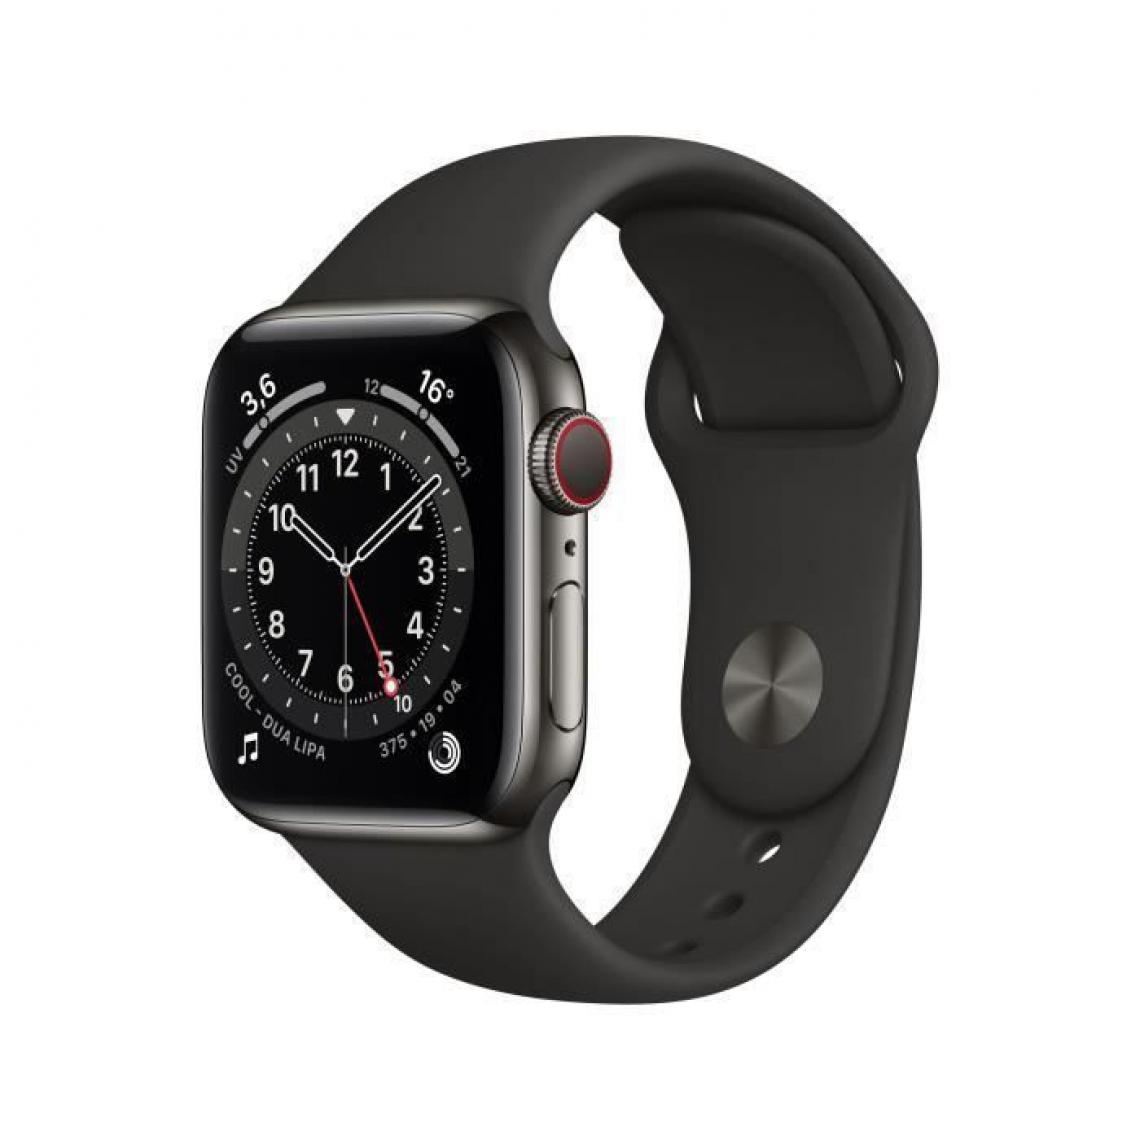 Apple - Apple Watch Series 6 GPS + Cellular, 40mm Boîtier en Acier Inoxidable Graphite avec Bracelet Sport Noir - Apple Watch